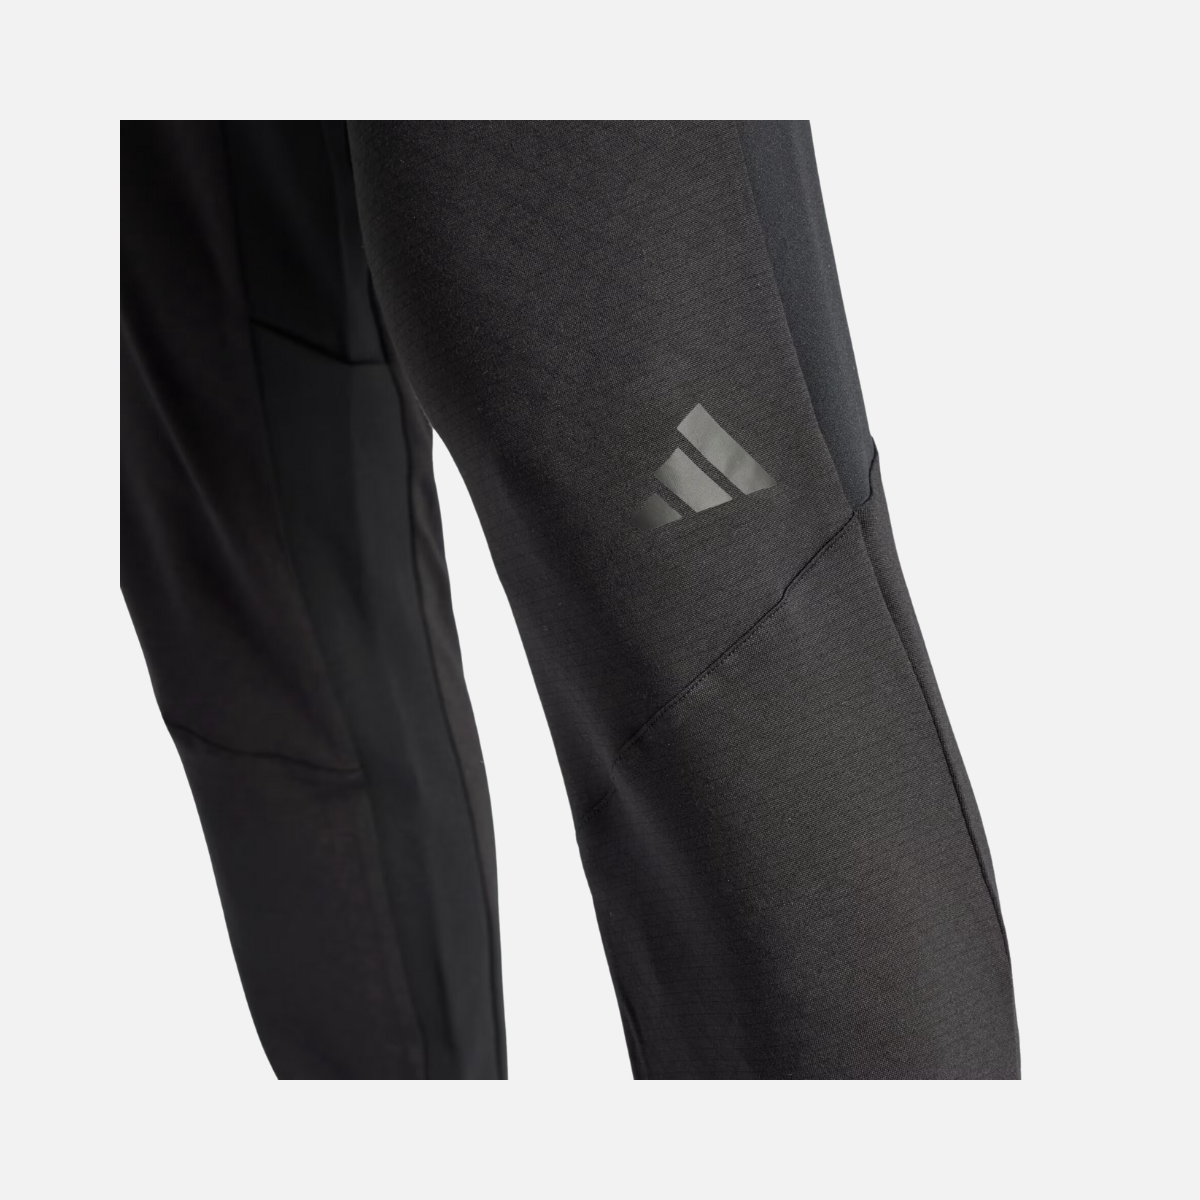 Adidas Designed Winterised Men's Training Pant -Black/Black